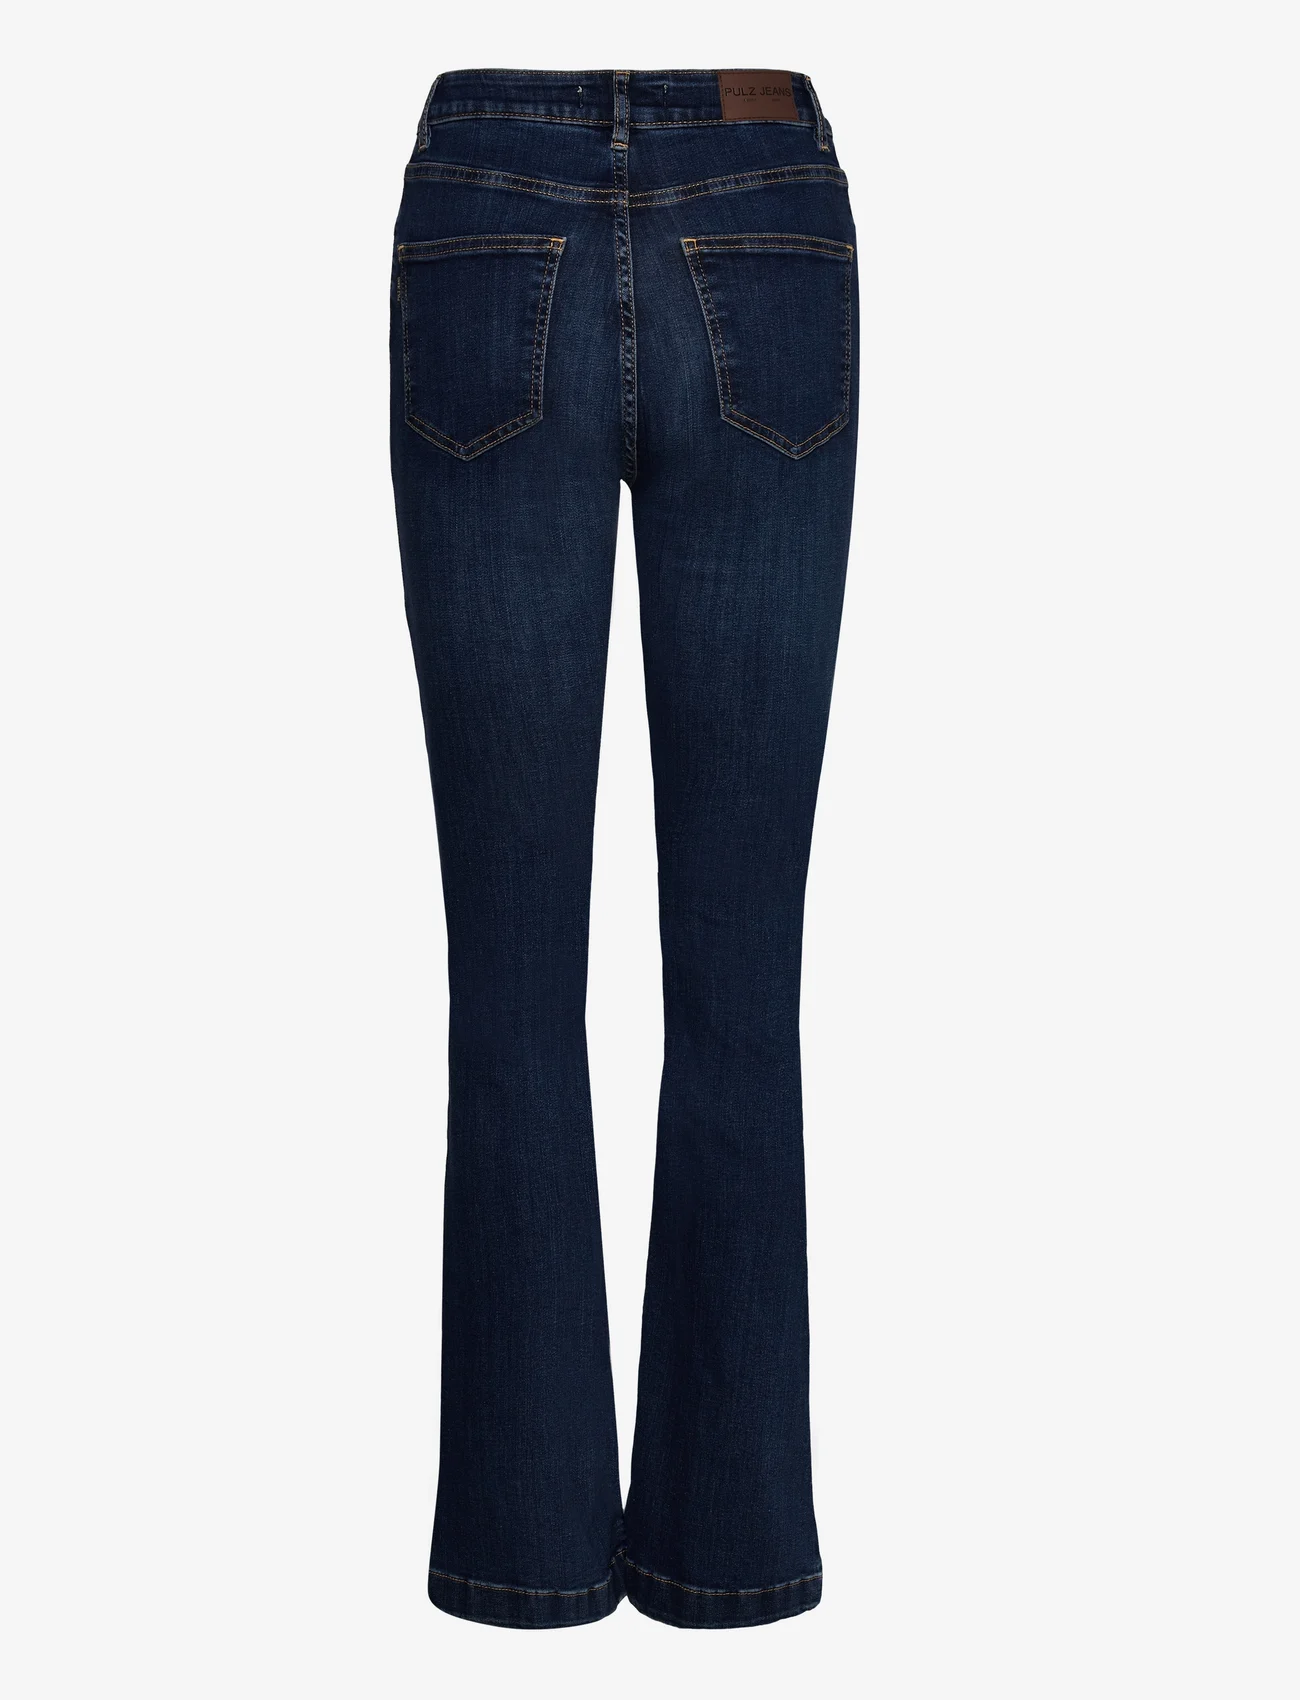 Pulz Jeans - PZBECCA UHW Bootcut Leg Full Length - nuo kelių platėjantys džinsai - dark blue denim - 1